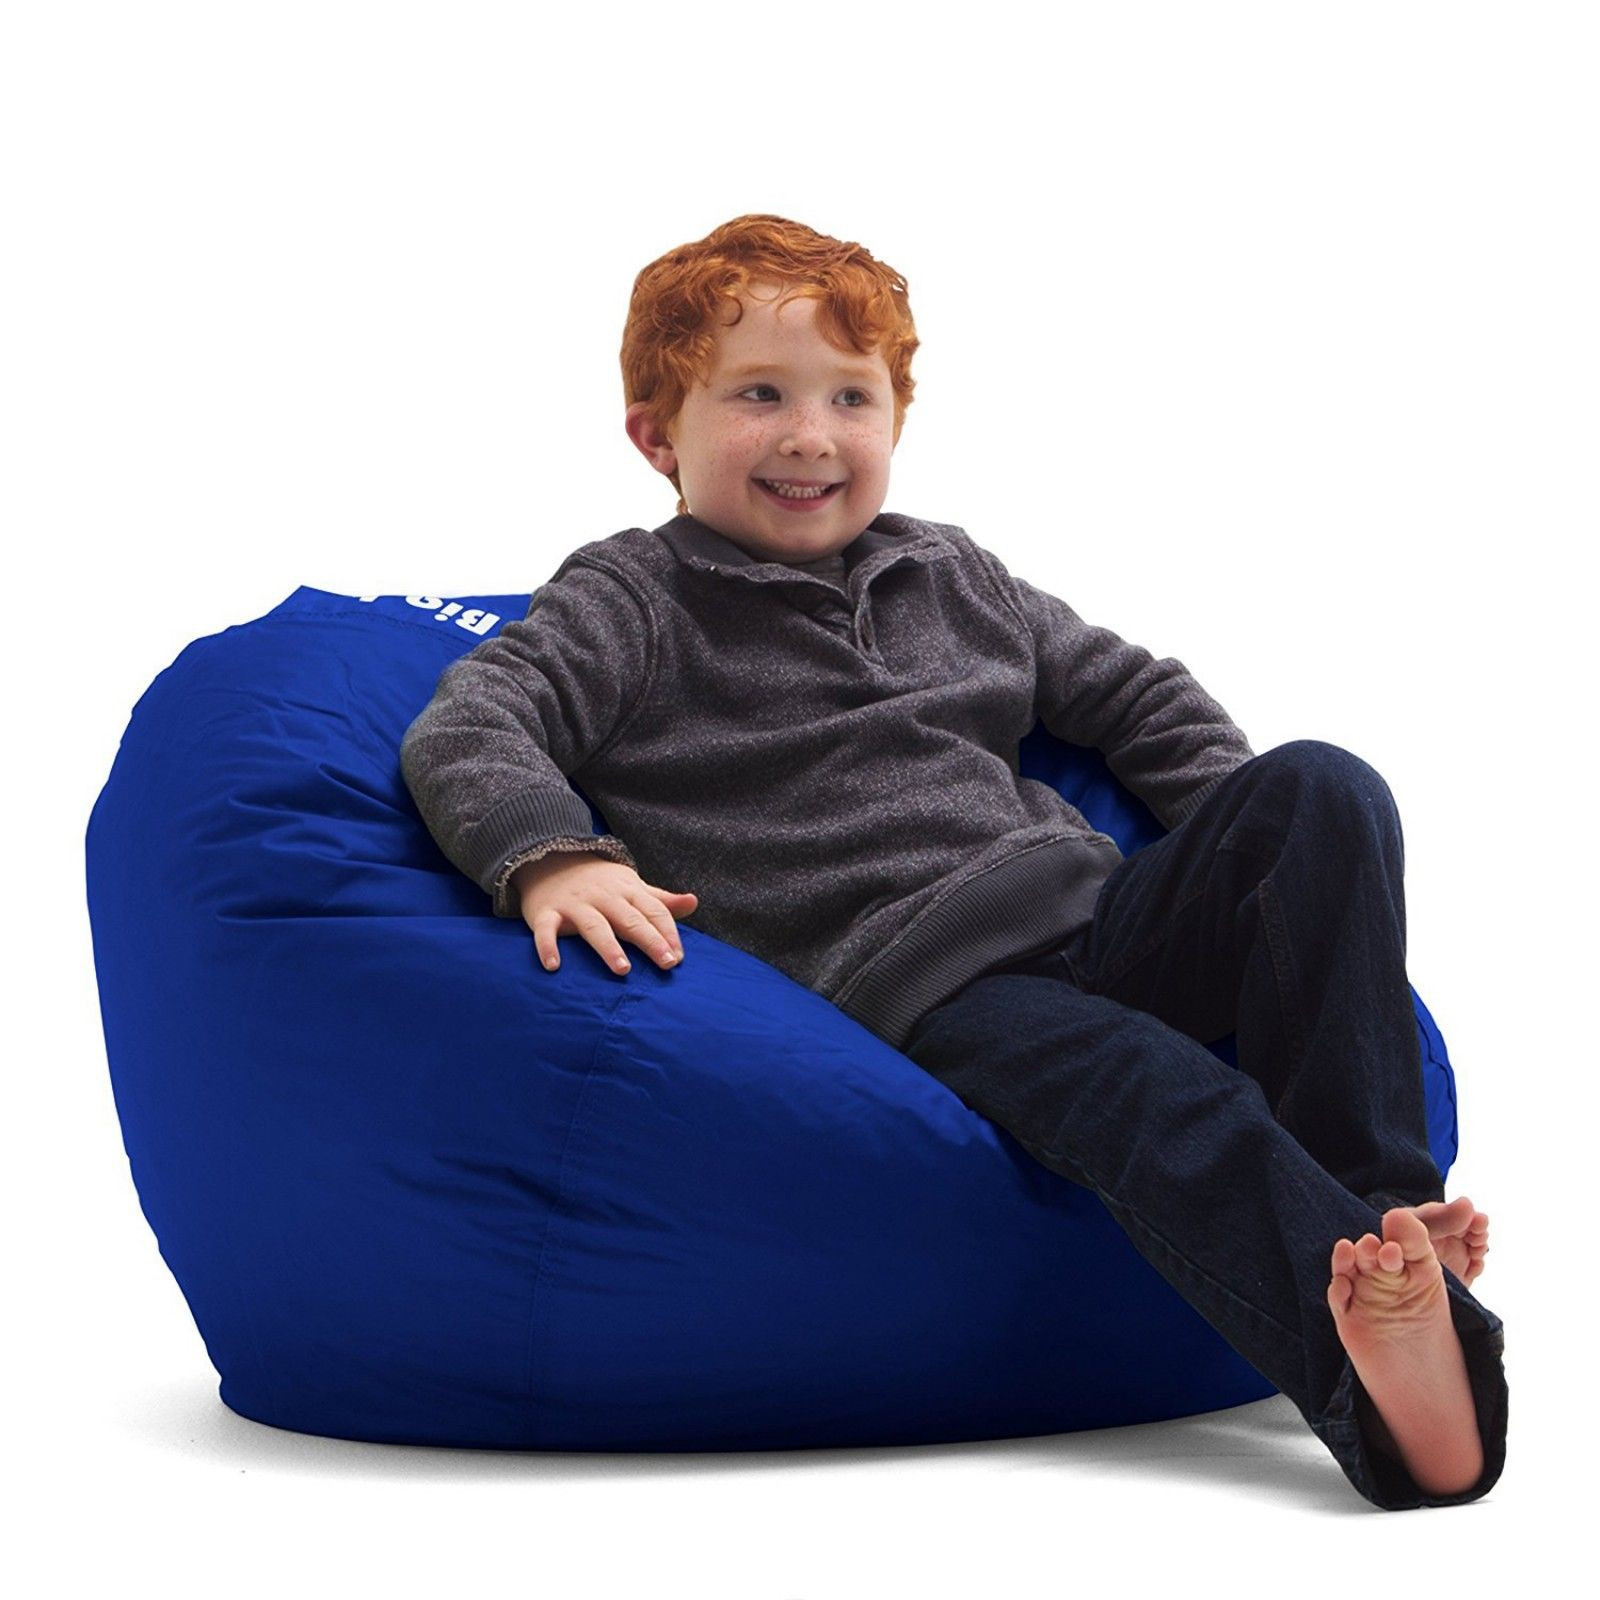 Best ideas about Big Joe Dorm Chair
. Save or Pin Bean Bag Chair Big Joe Dorm Kids Seat Furniture 98 Inch Now.